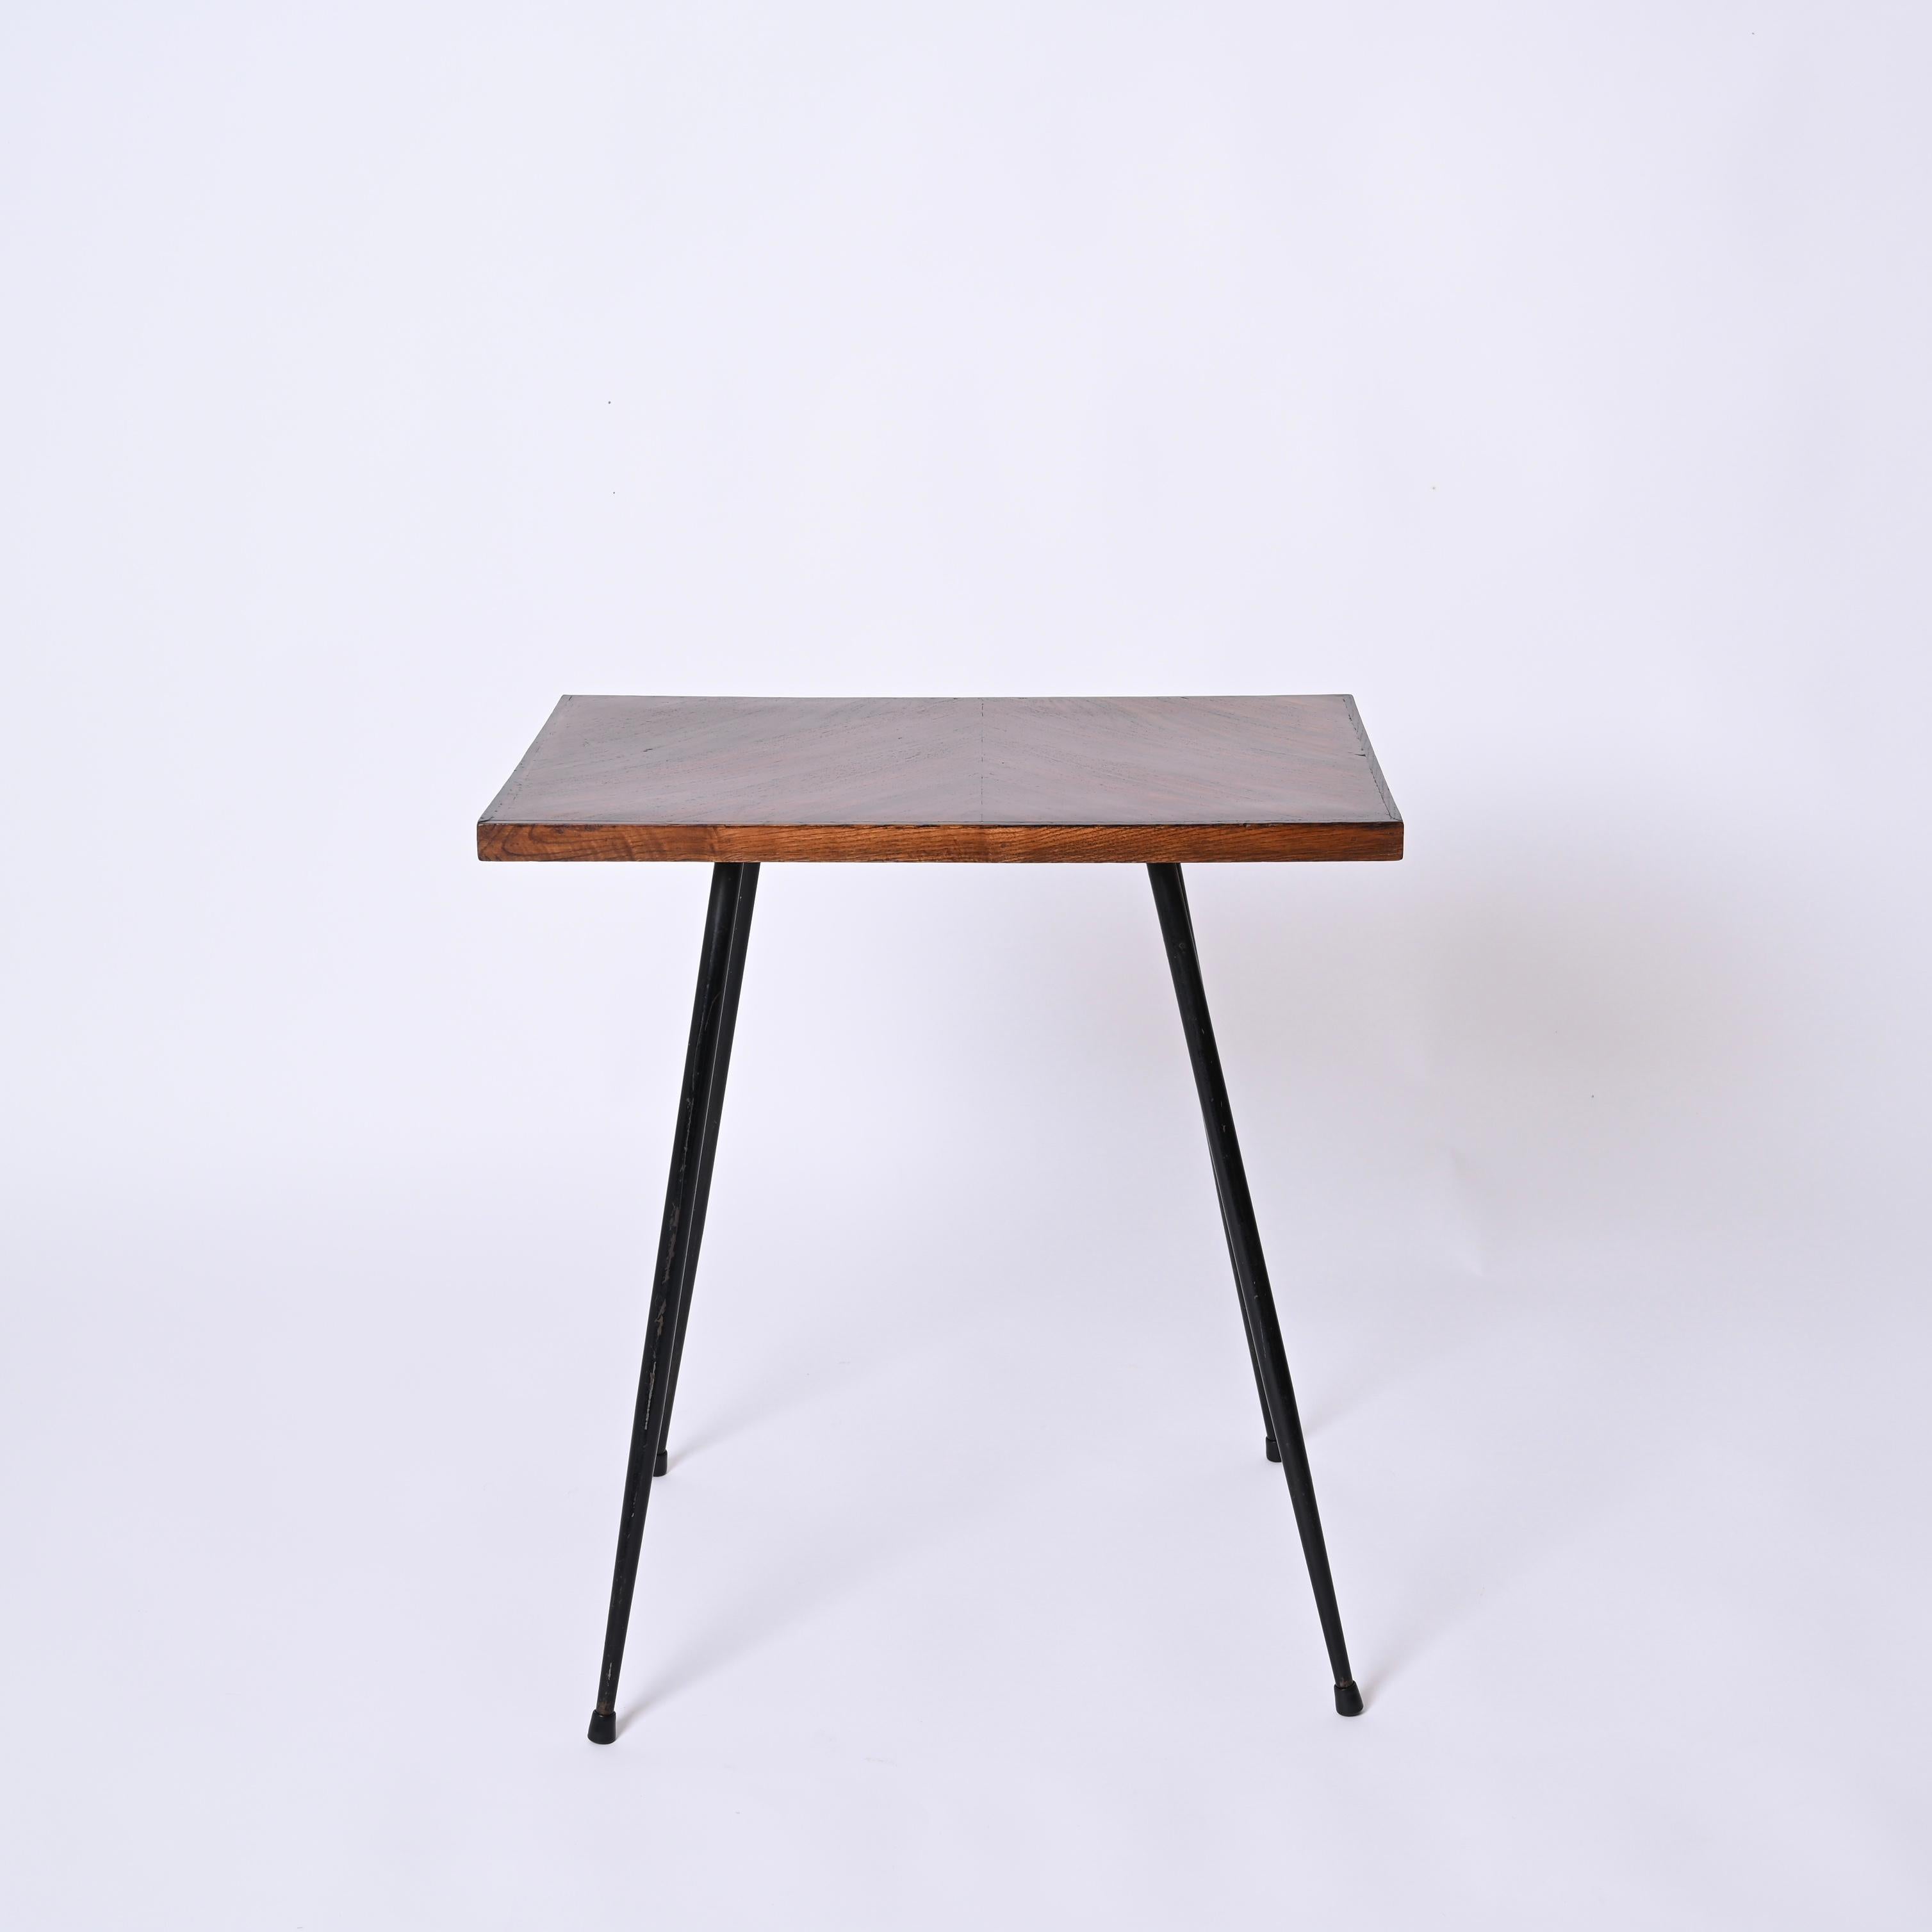 Italian Midcentury Rectangular Side Table in Teak Wood and Enameled Metal, 1950s For Sale 7